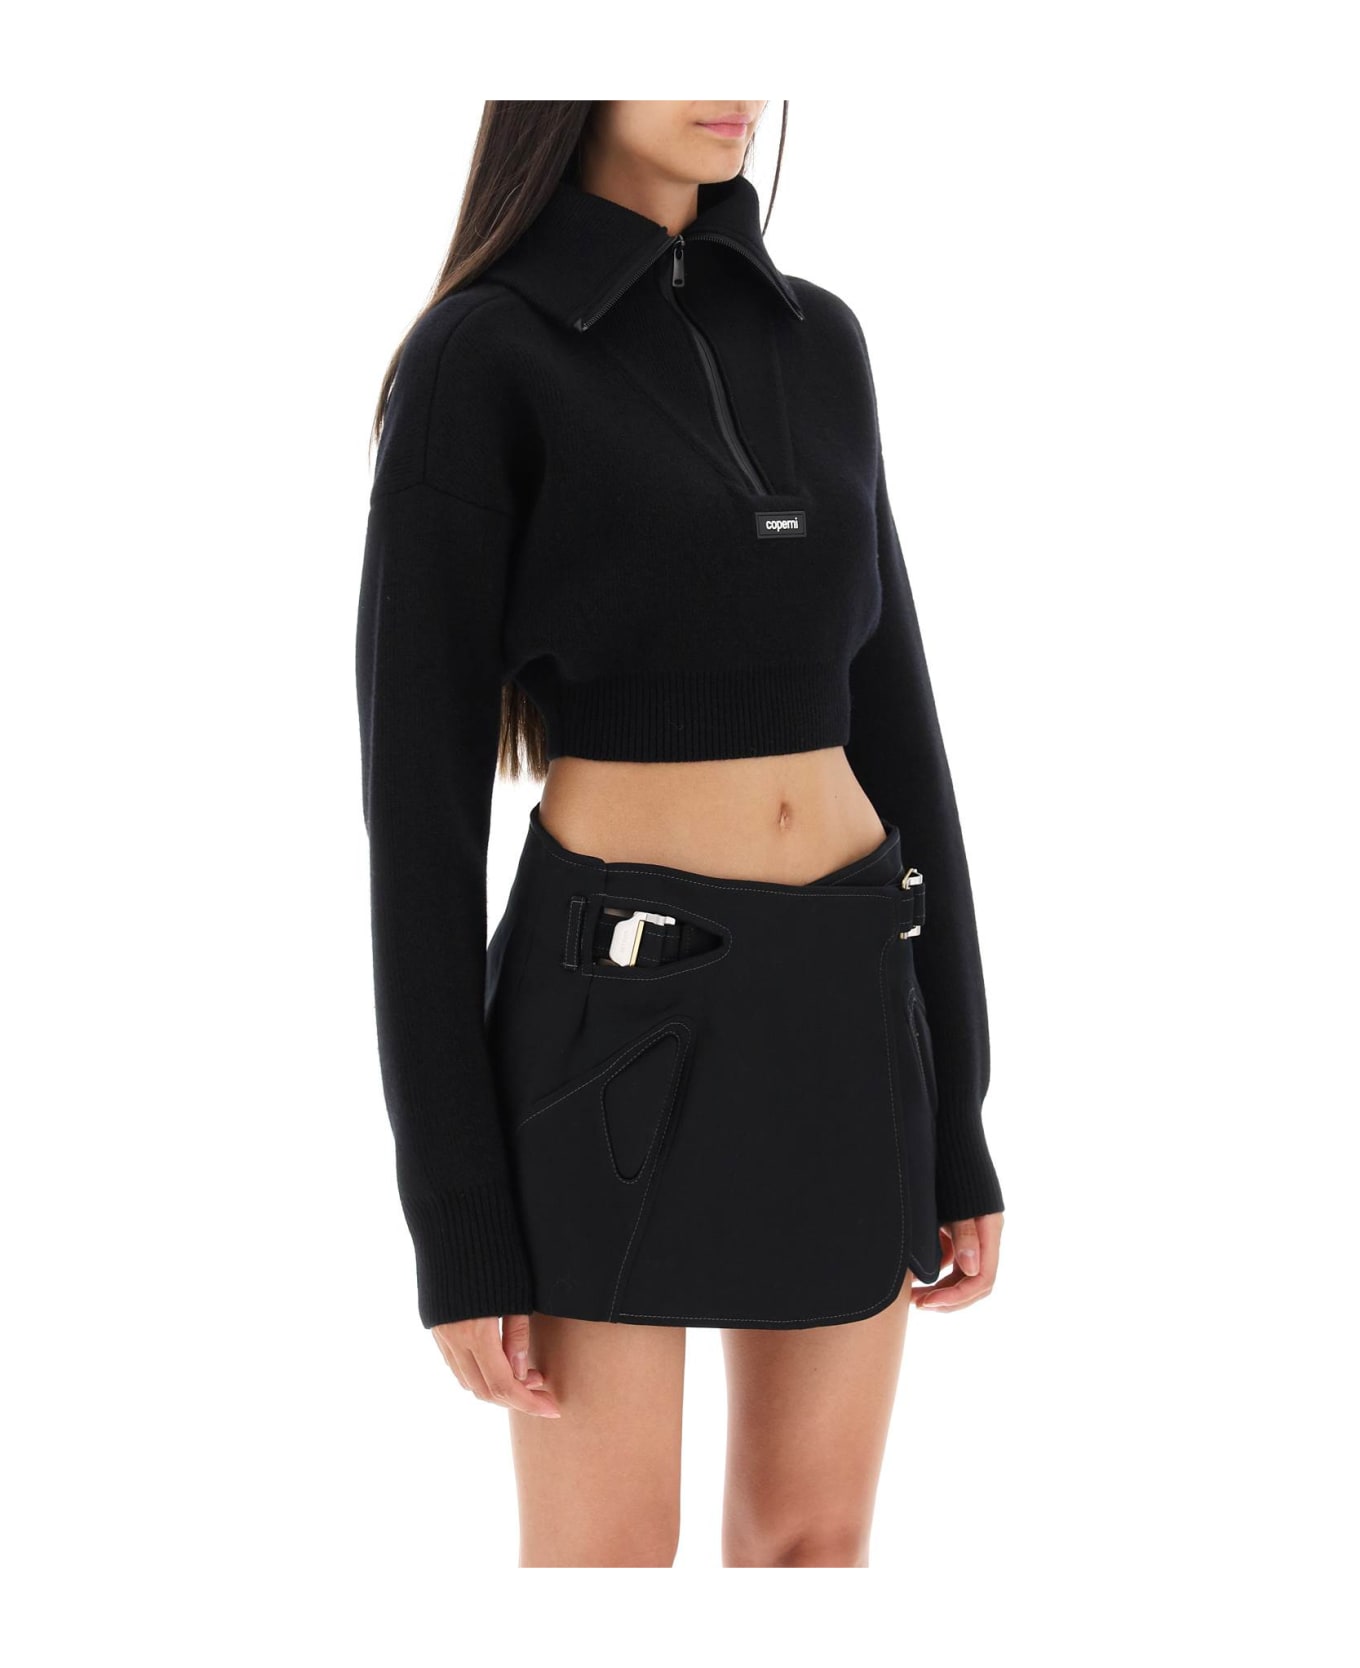 Coperni Half Zip Cropped Boxy Wool Sweater - Black